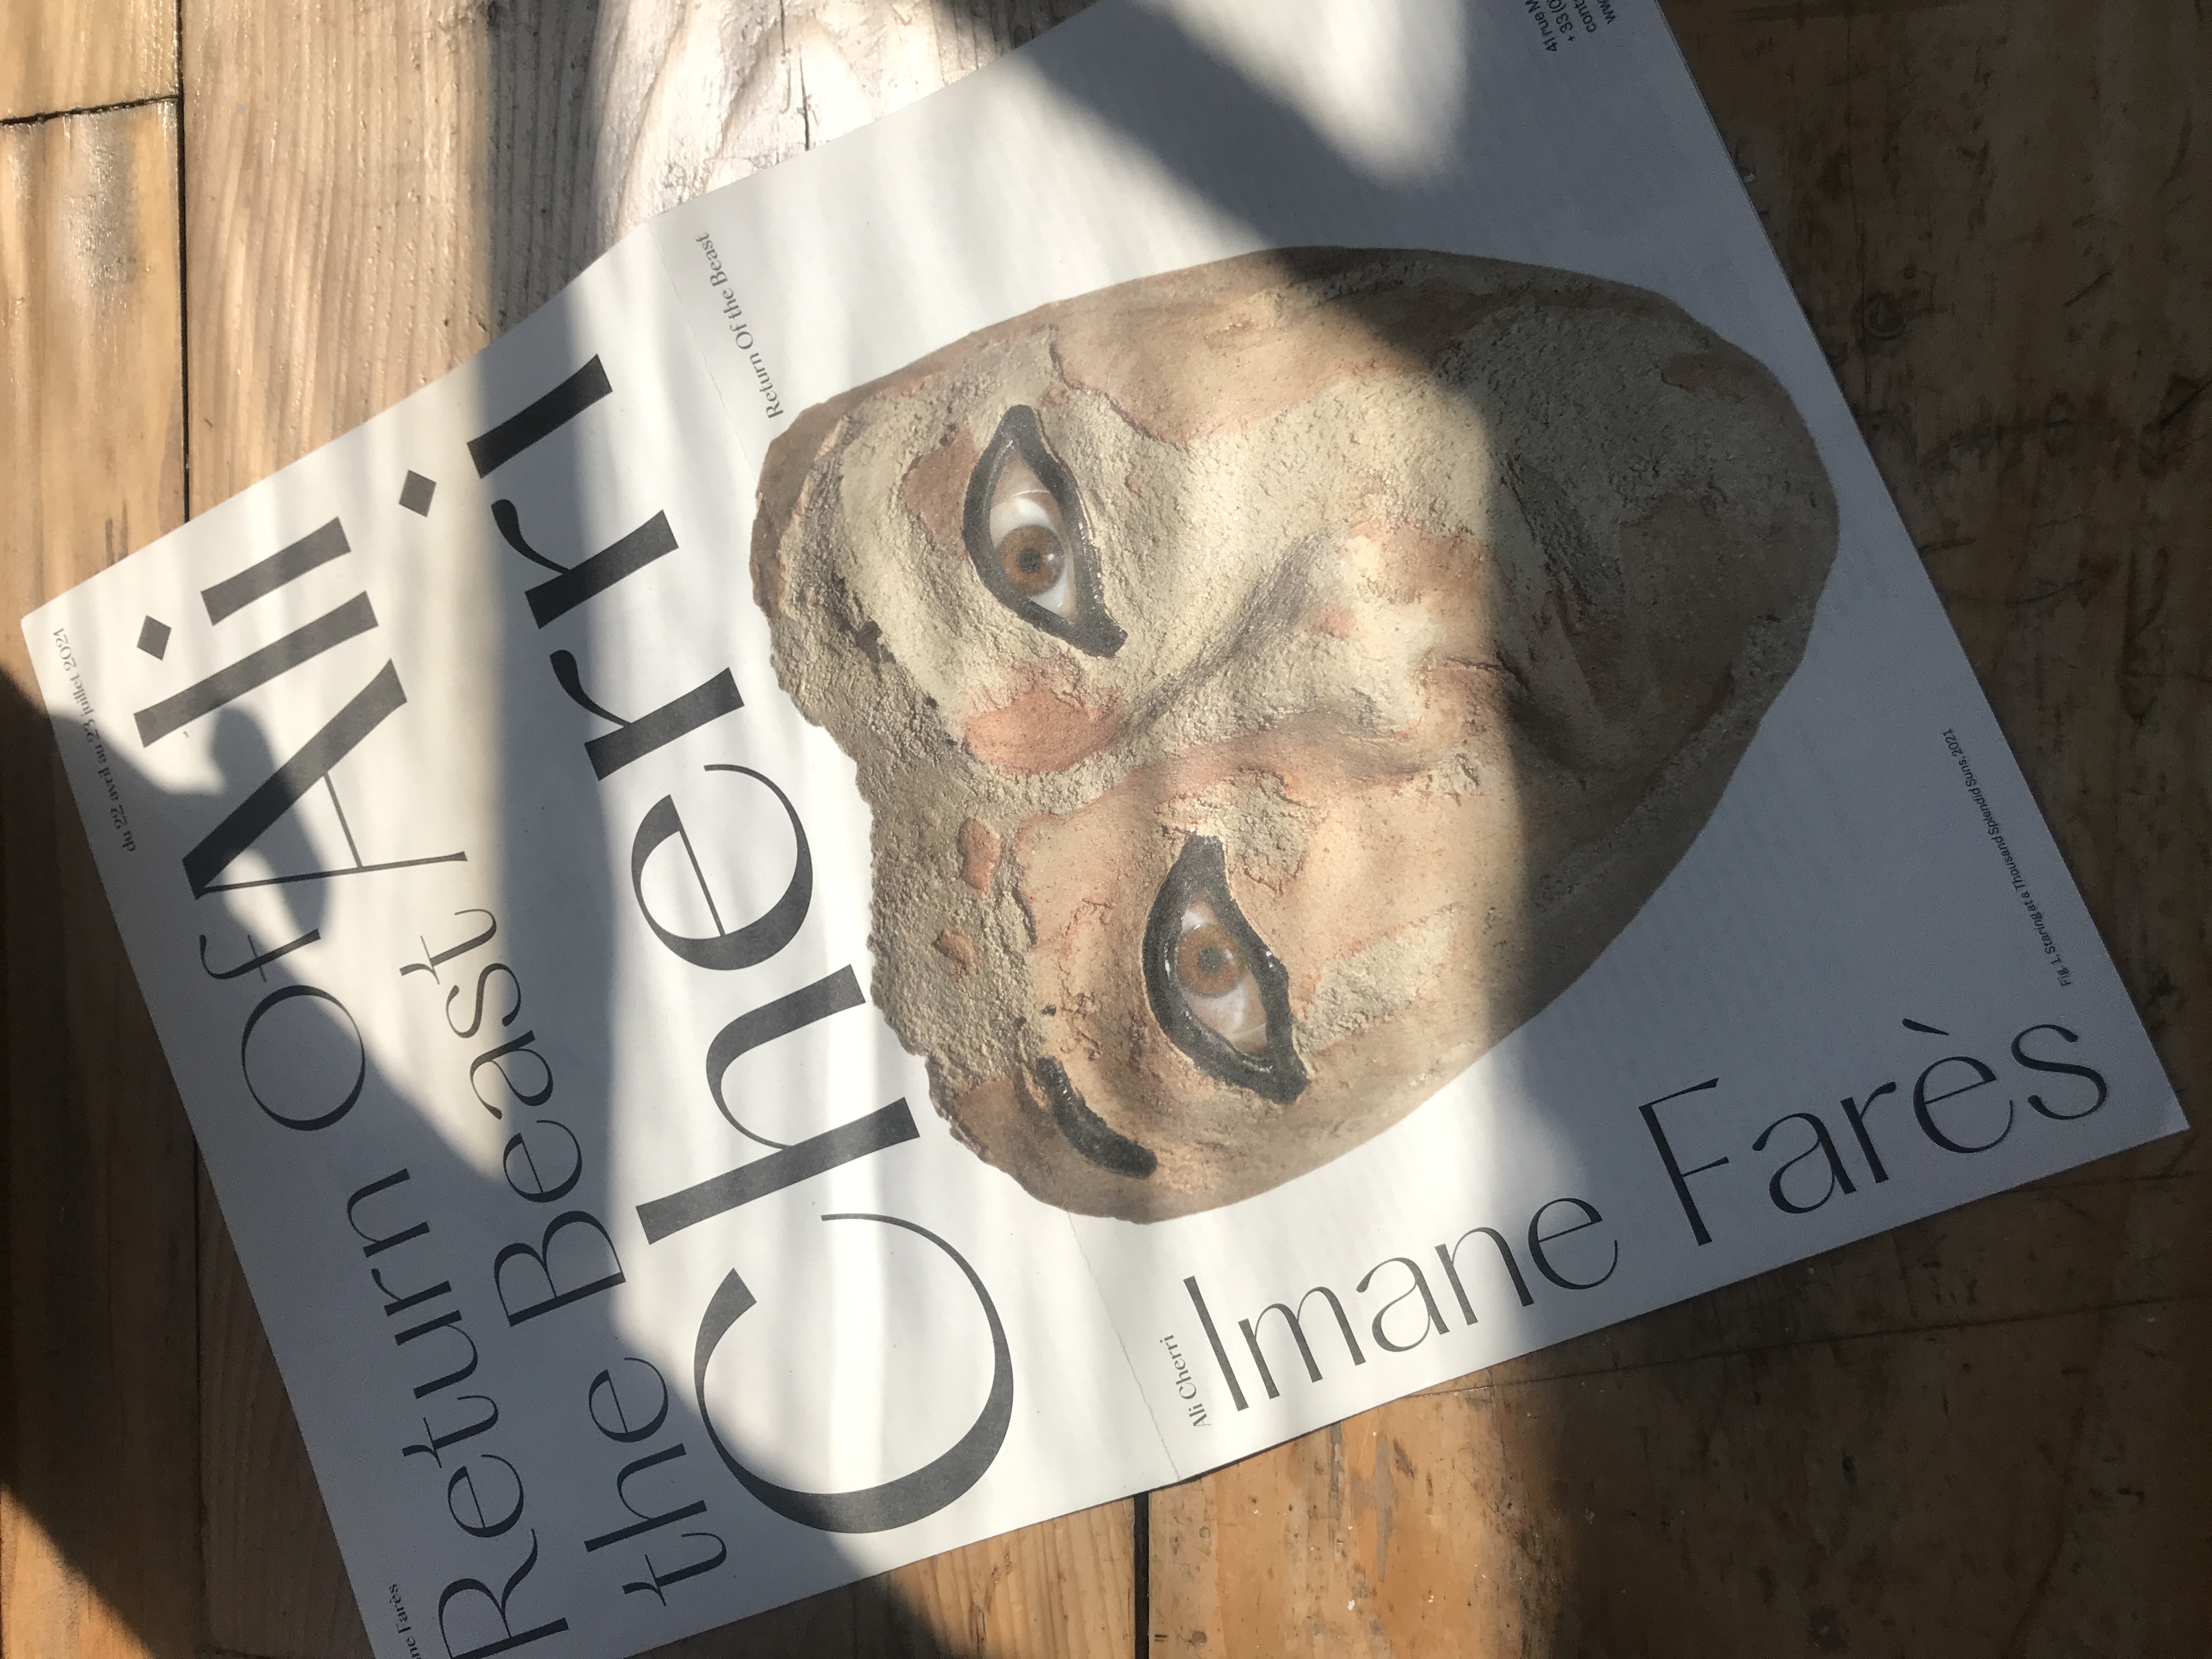 Cyril Makhoul - Imane Farès — Newspaper for Ali Cherri's exhibition